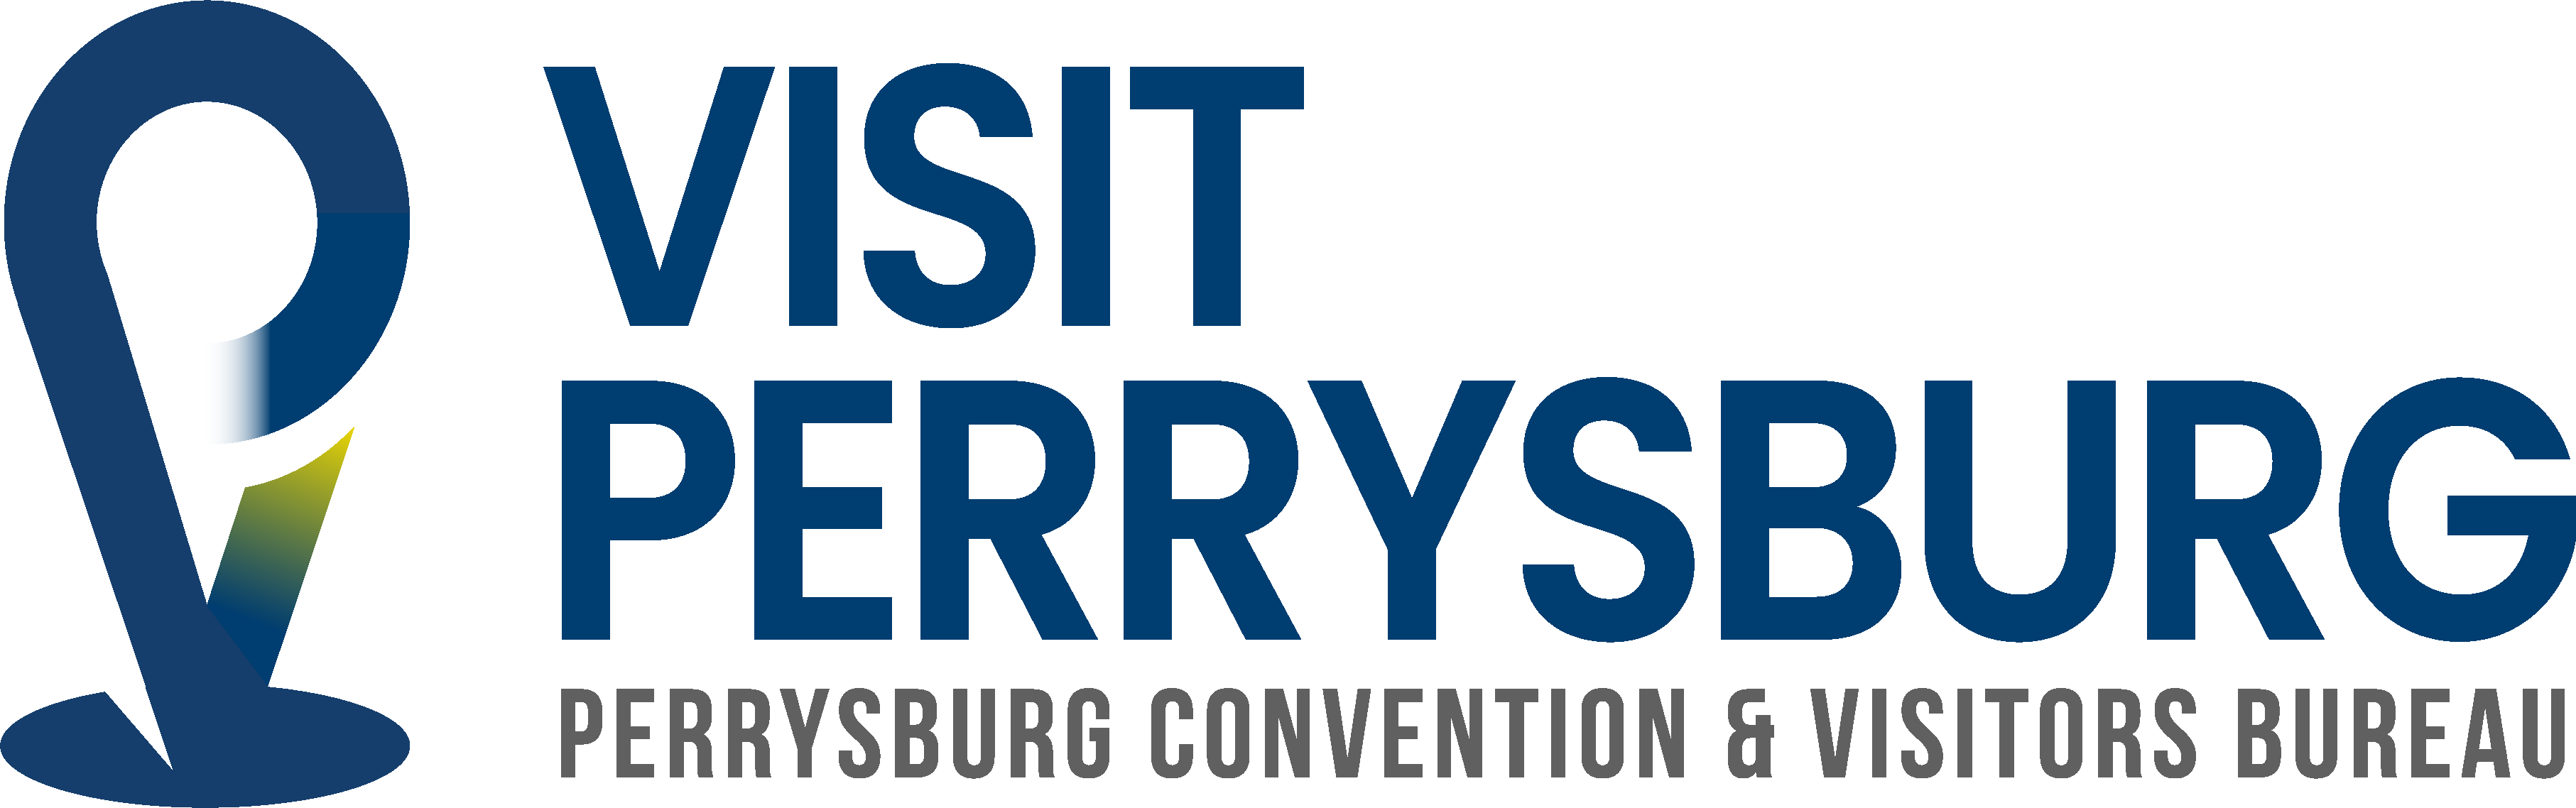 Perrysburg Convention and Visitors Bureau